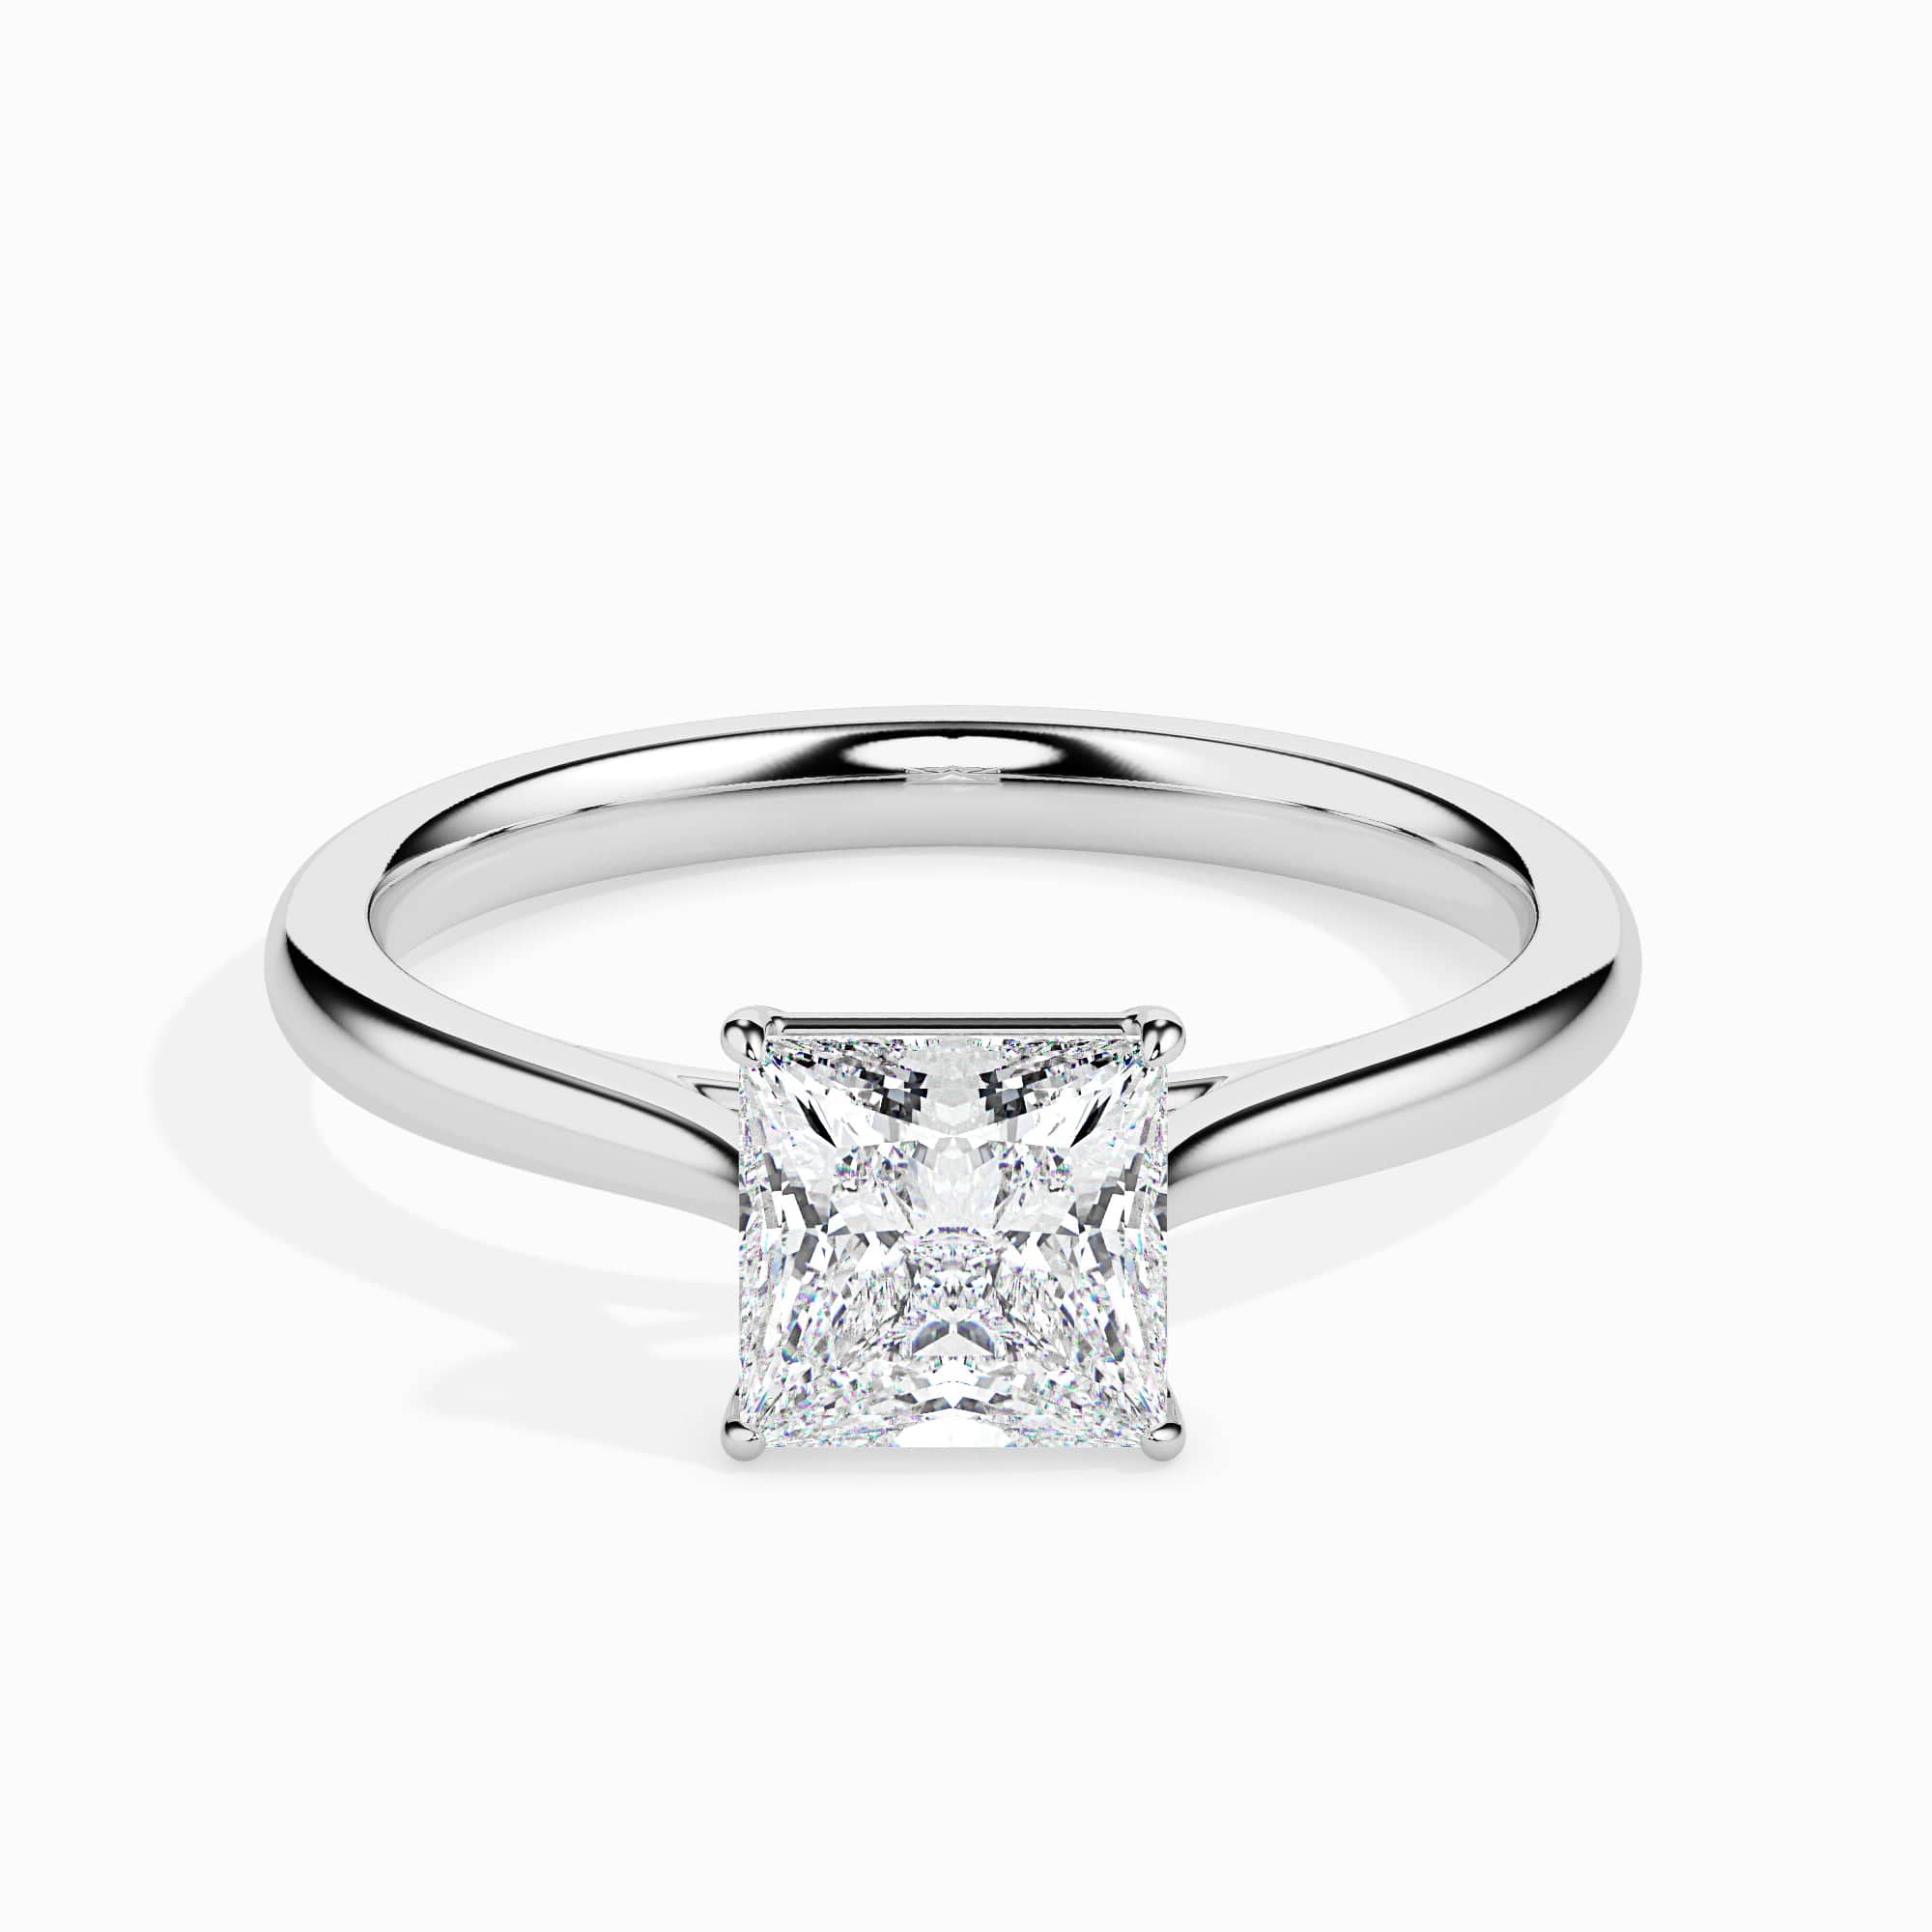 Princess Cut Diamond Engagement Rings for Women | TACORI Official